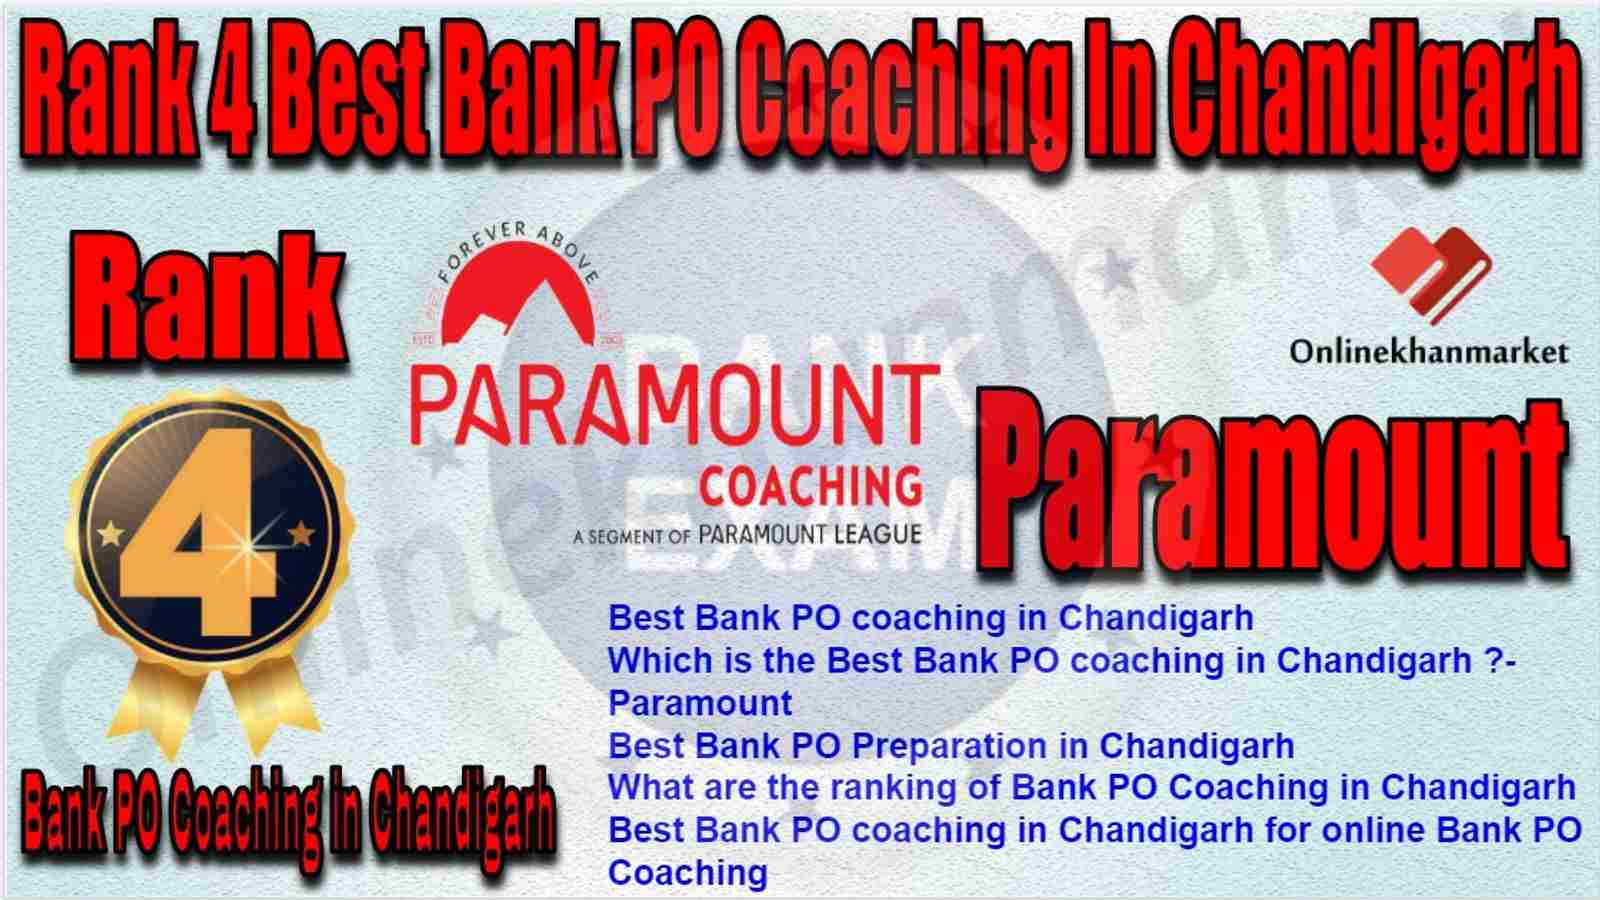 Rank 4 Best Bank PO Coaching in Chandigarh